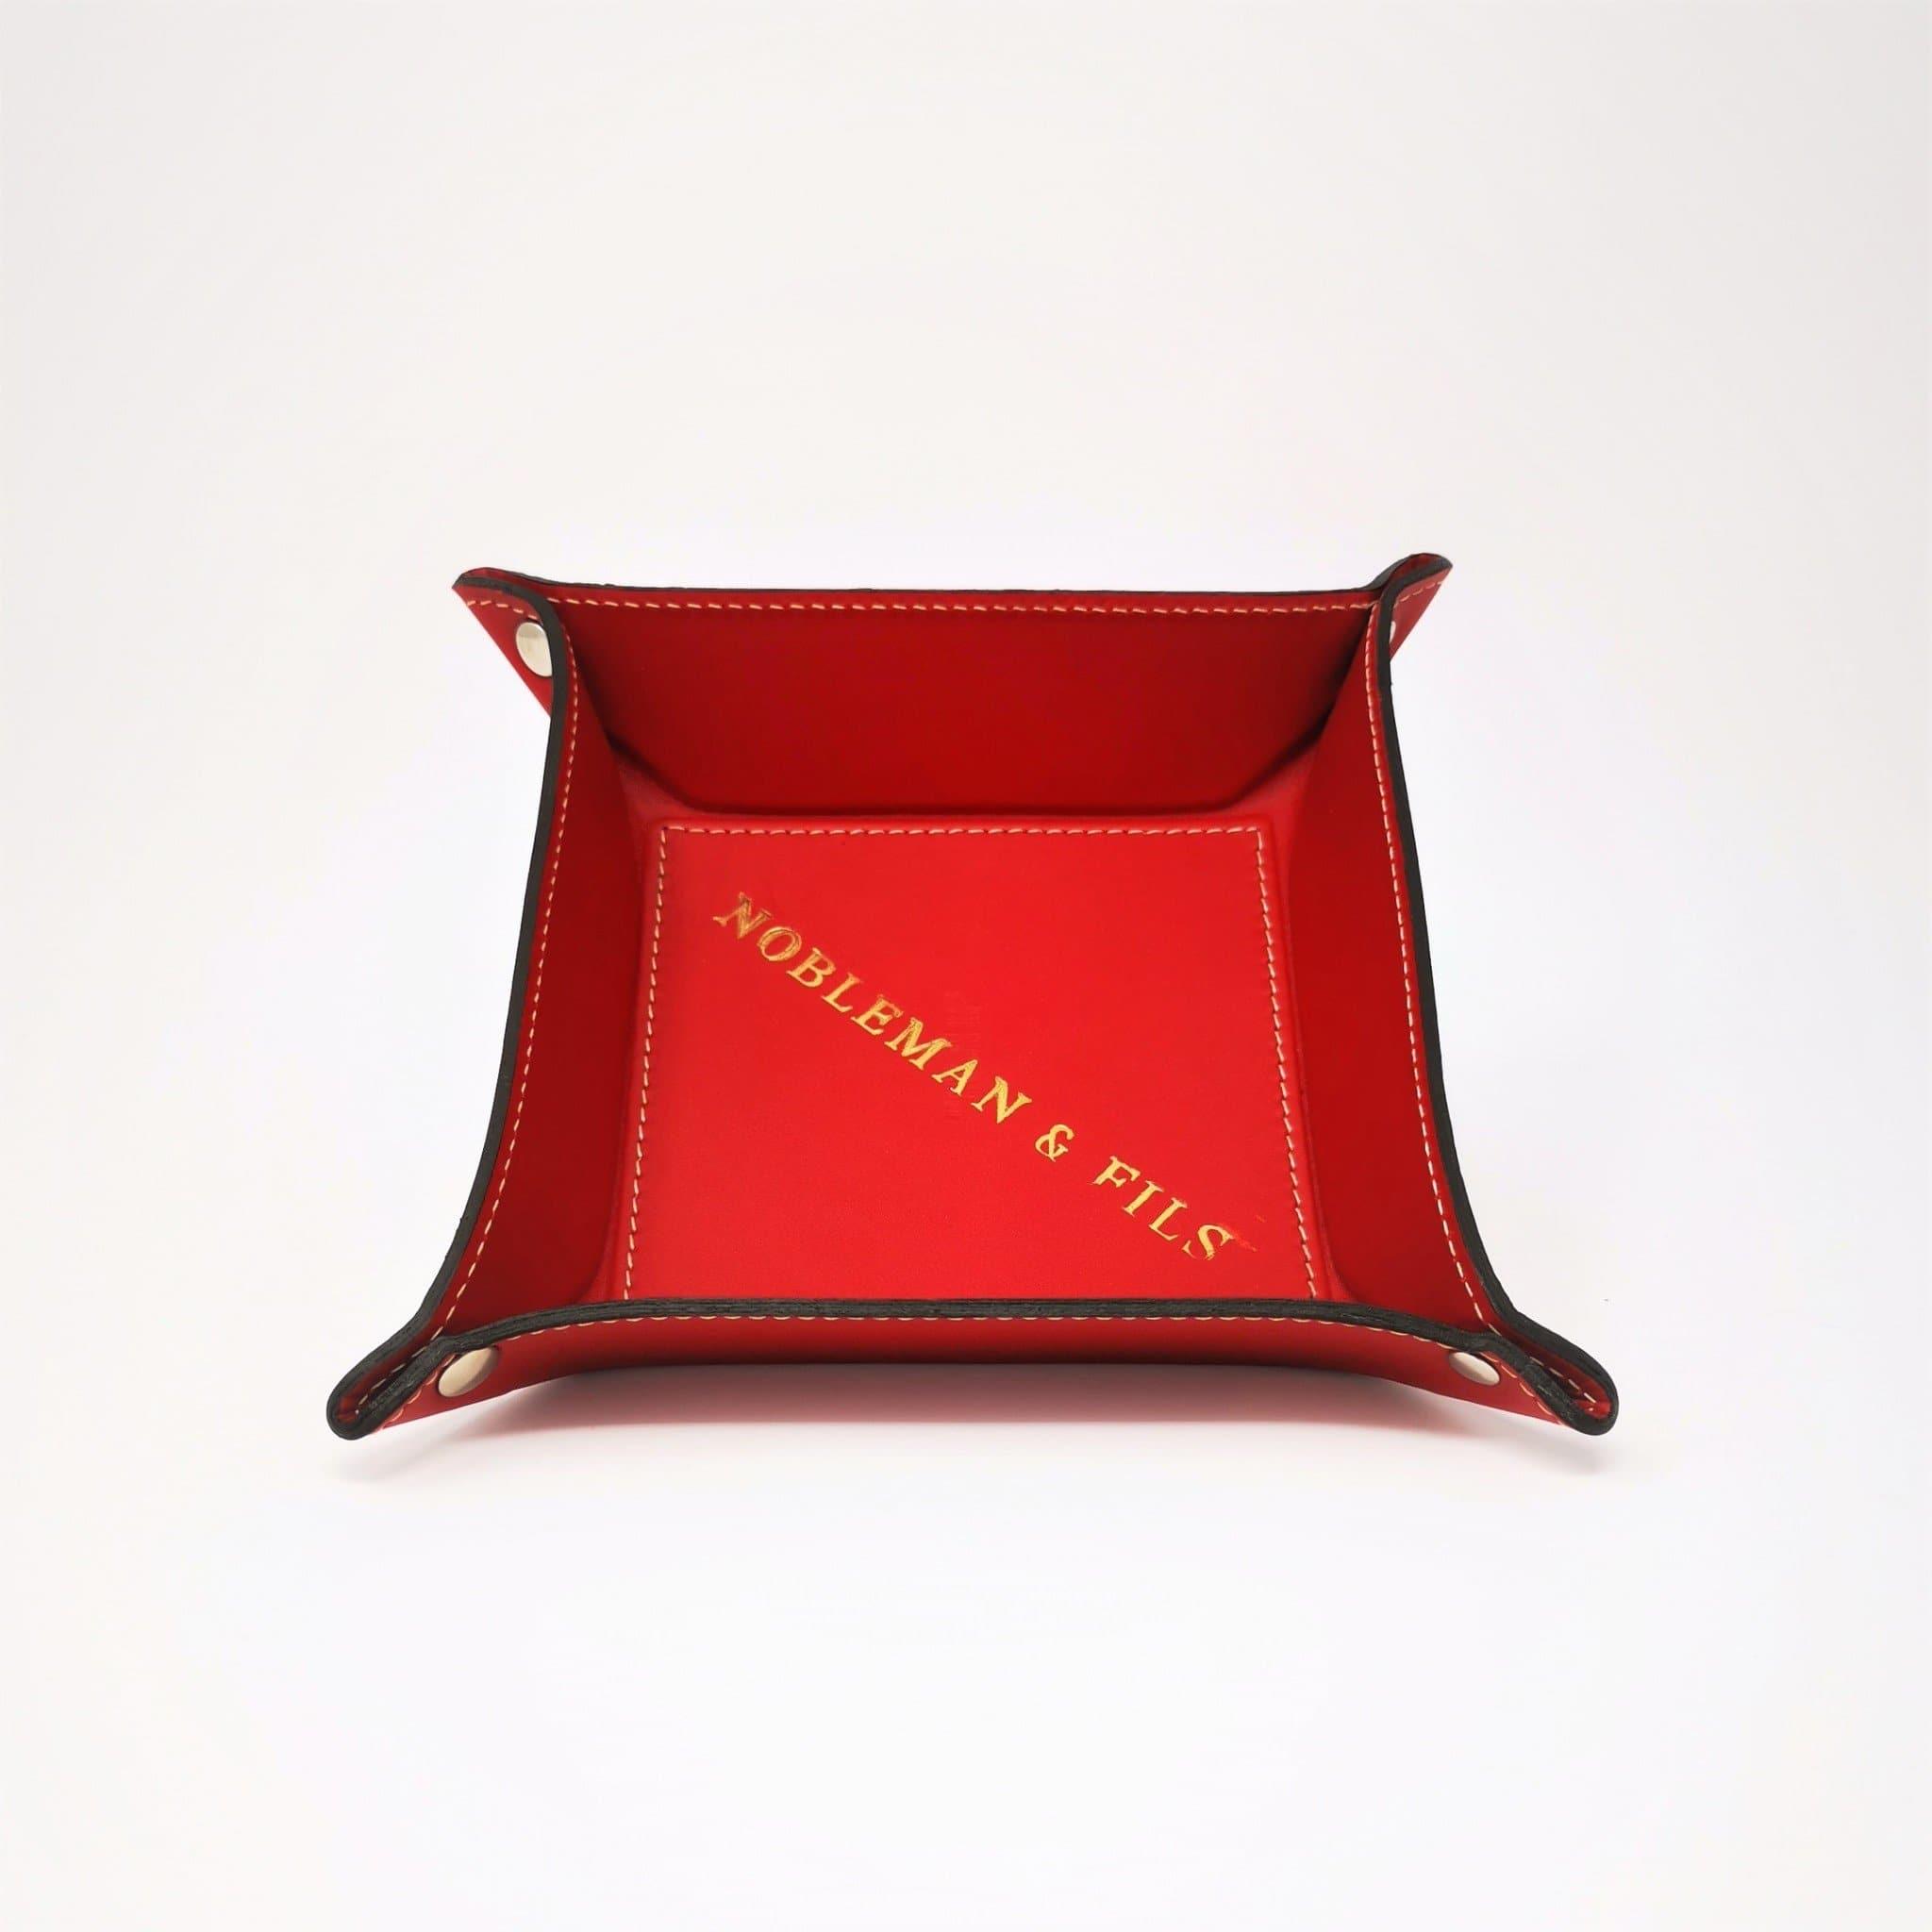 Laflamme- Vide-poche en cuir - Nobleman&Fils